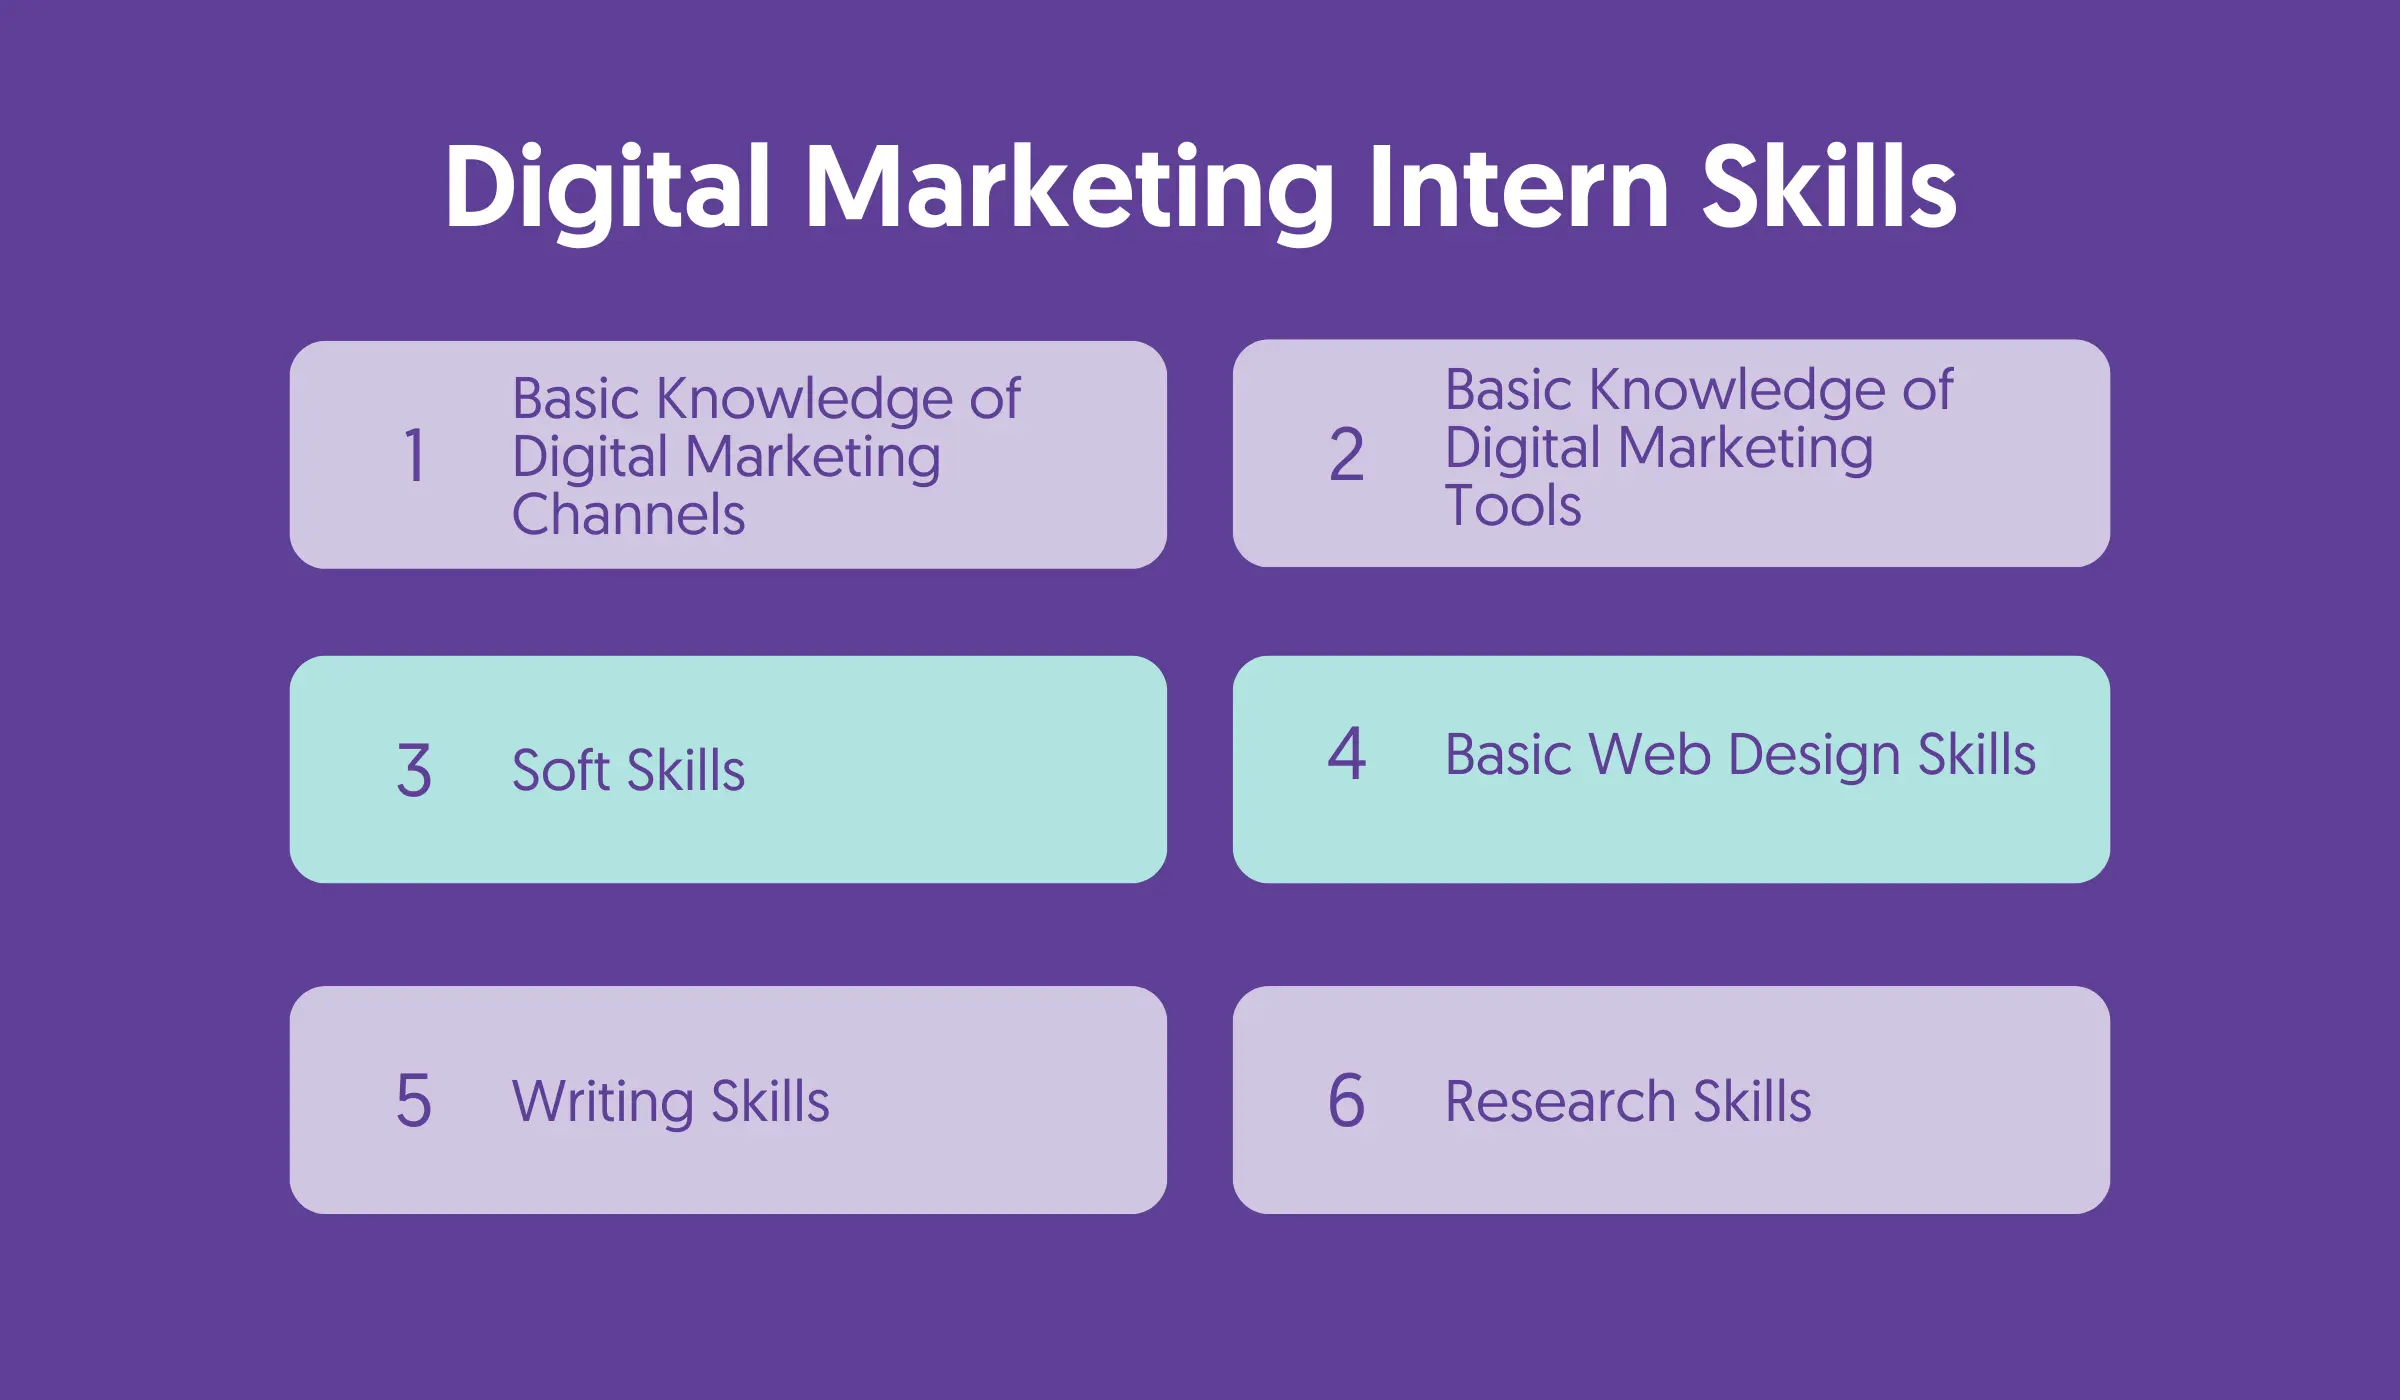 Digital Marketing Intern Skills